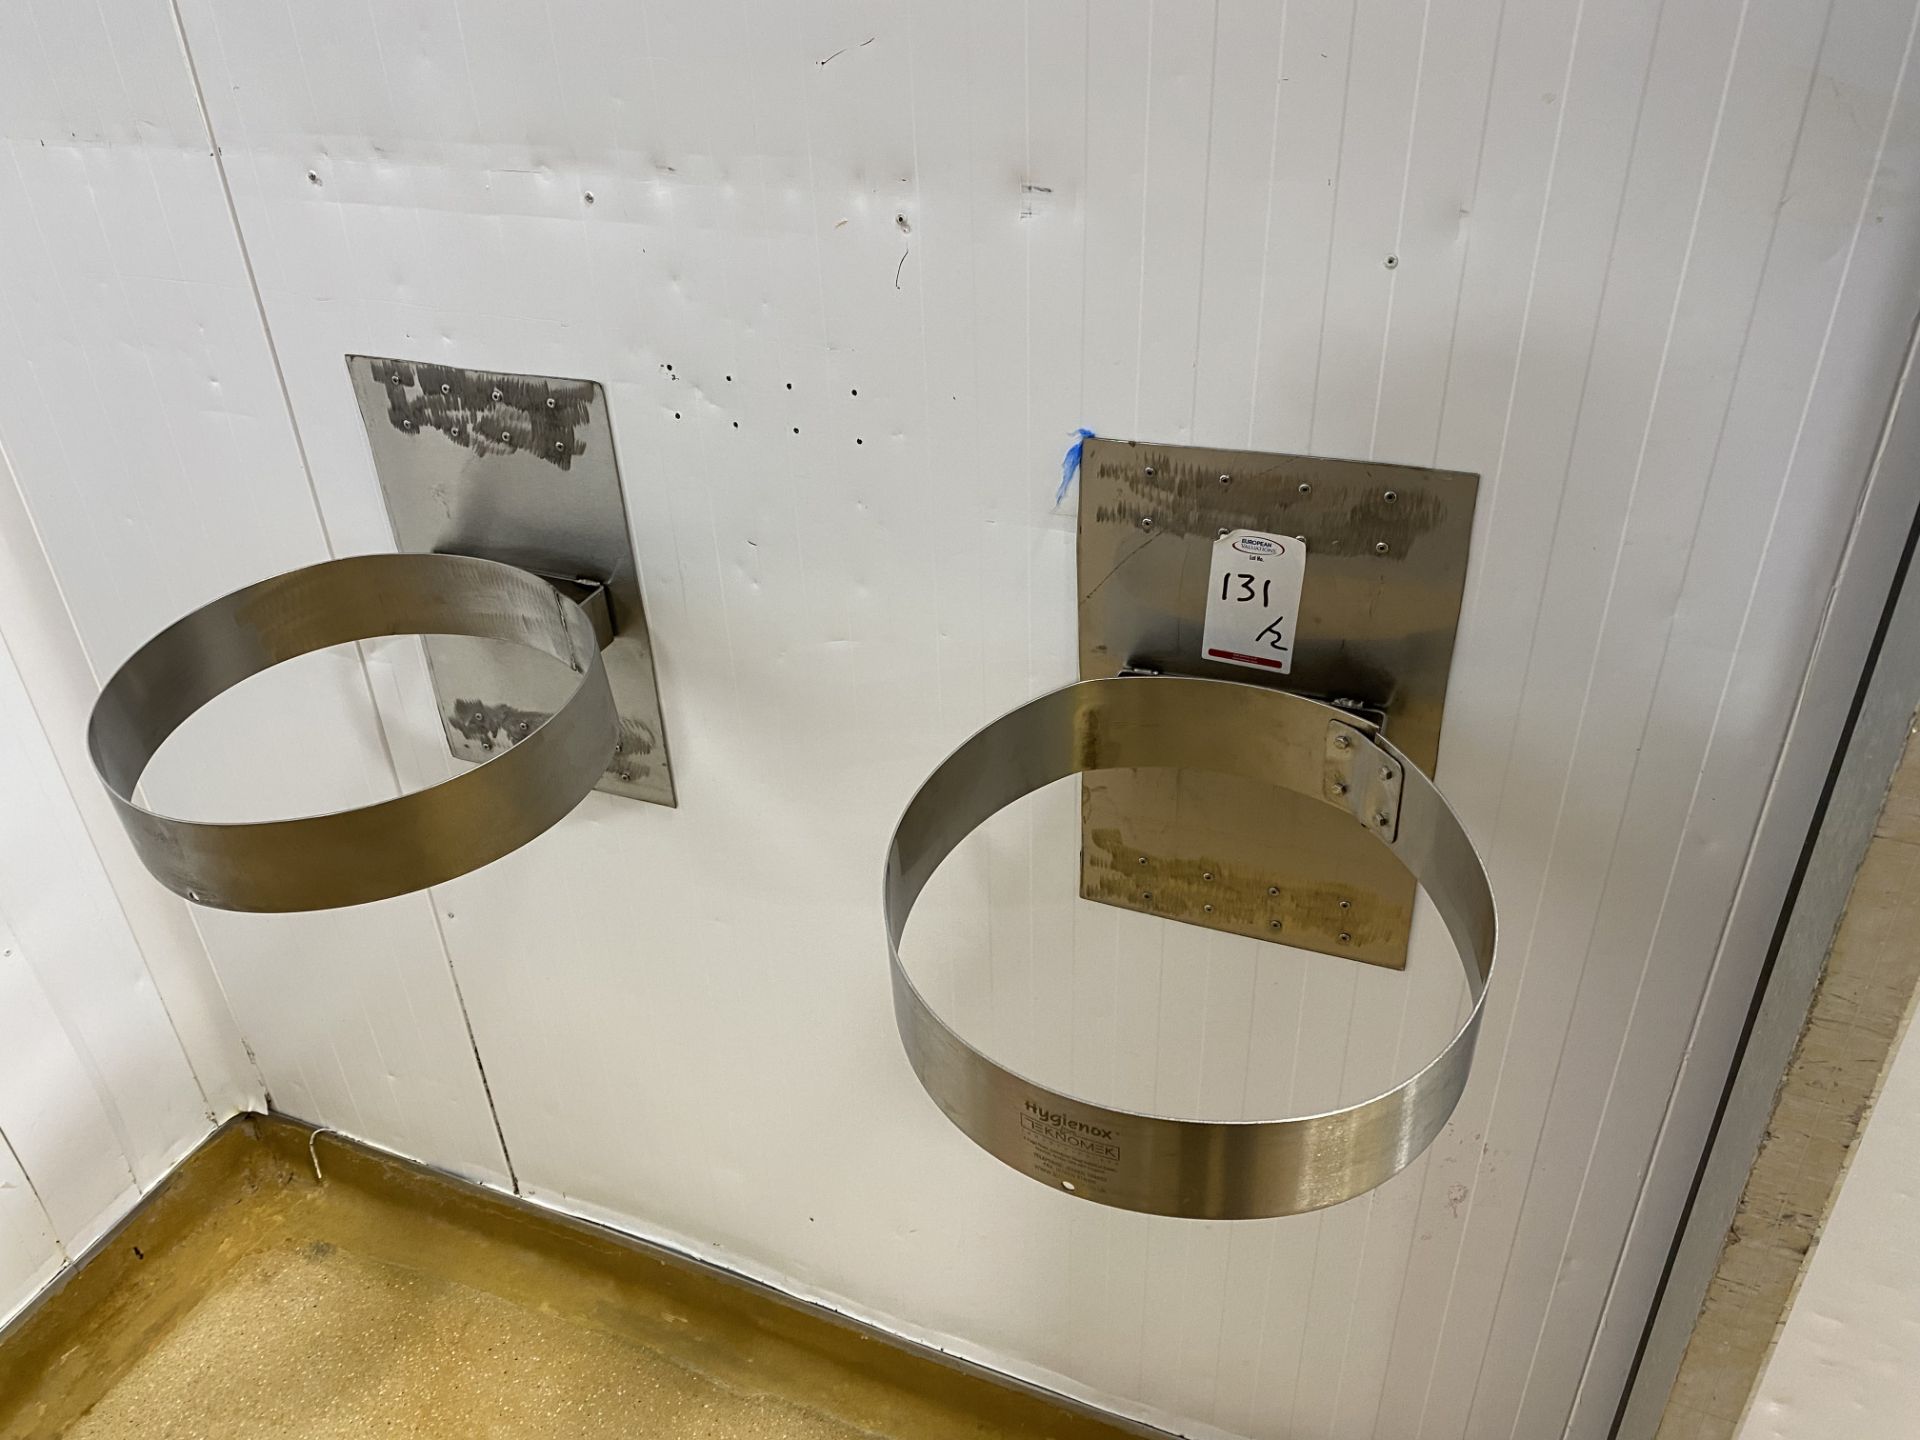 2 Stainless steel wall mounted waste bin holders